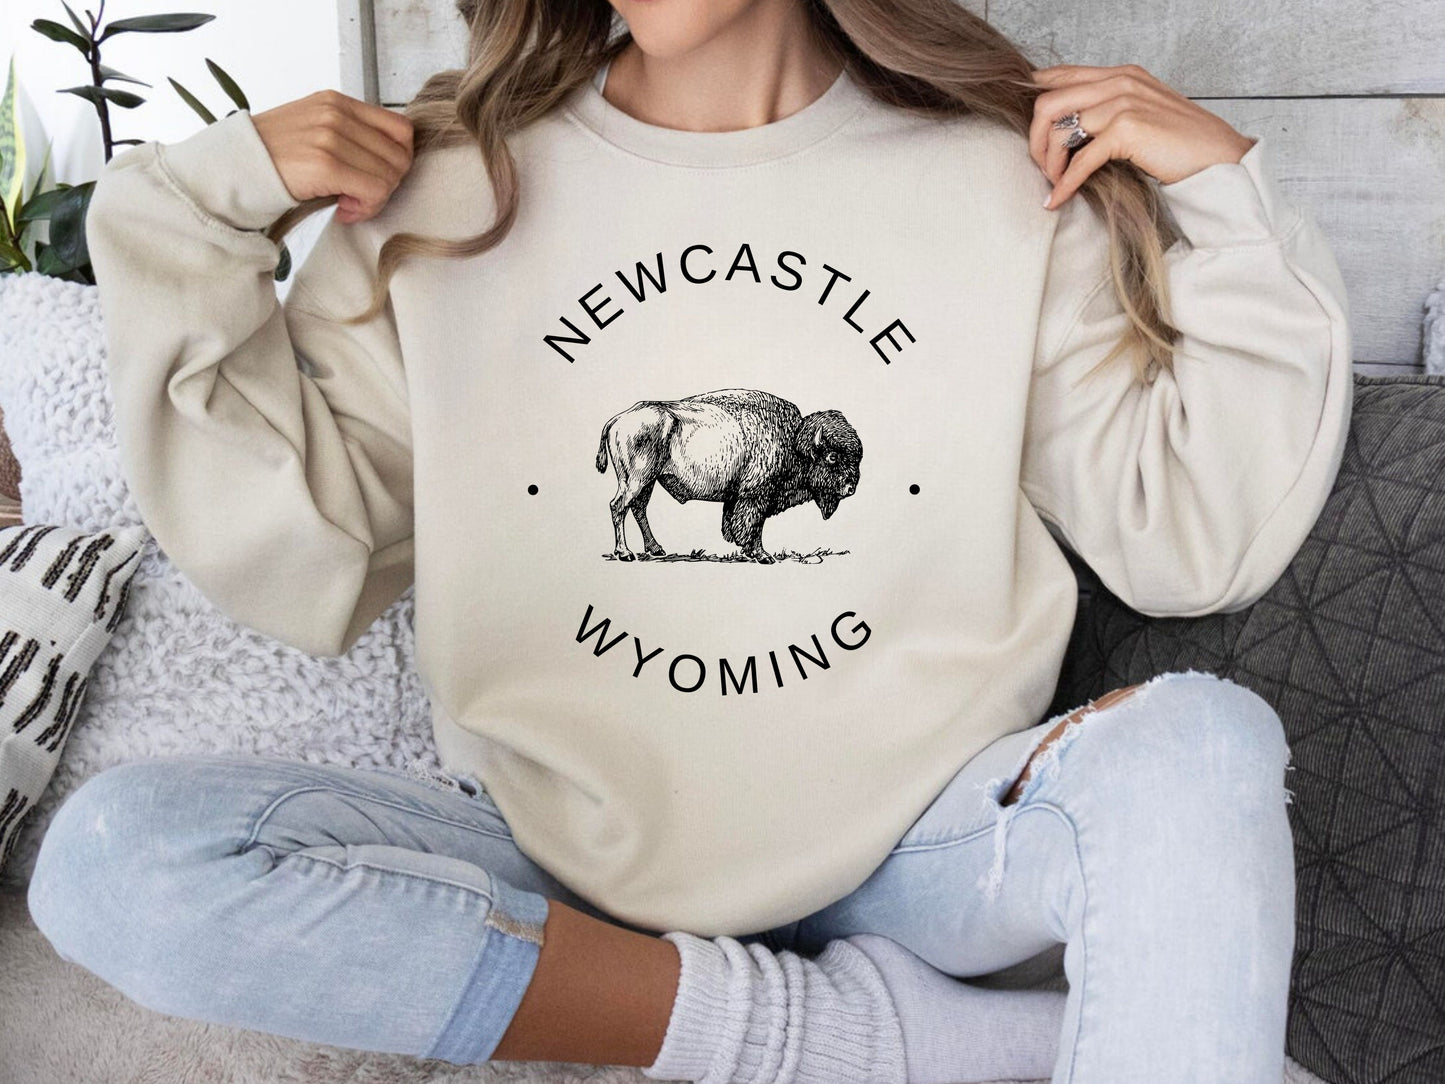 New Castle Women Wyoming Sweatshirt